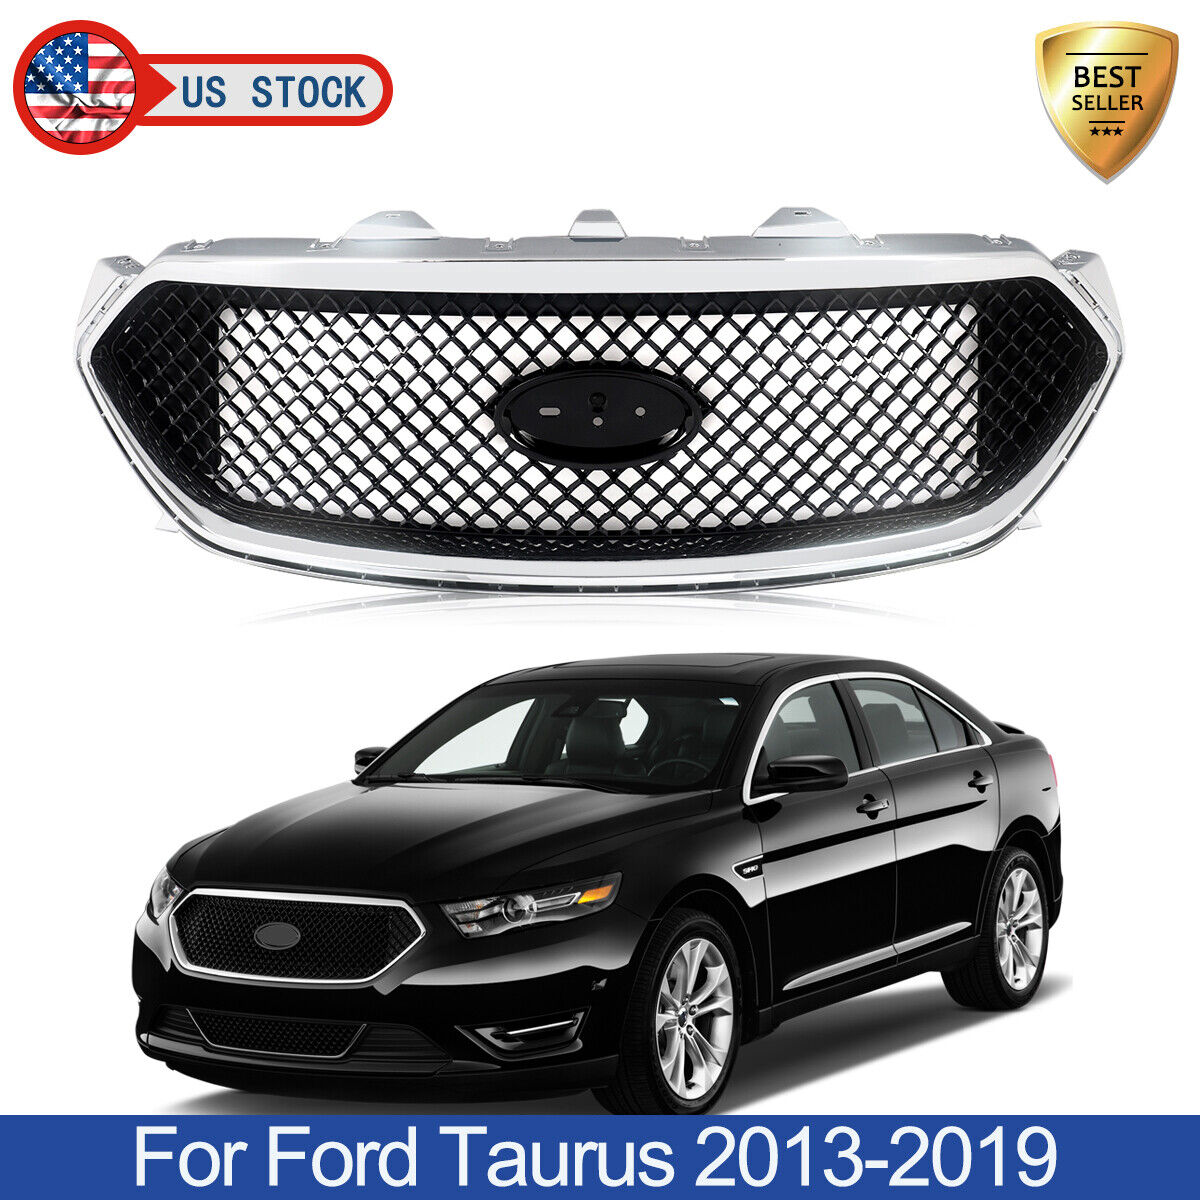 For Ford Taurus 2013-2019 SHO Front Upper Grille Black Chrome Trim DG1Z-8200-DC